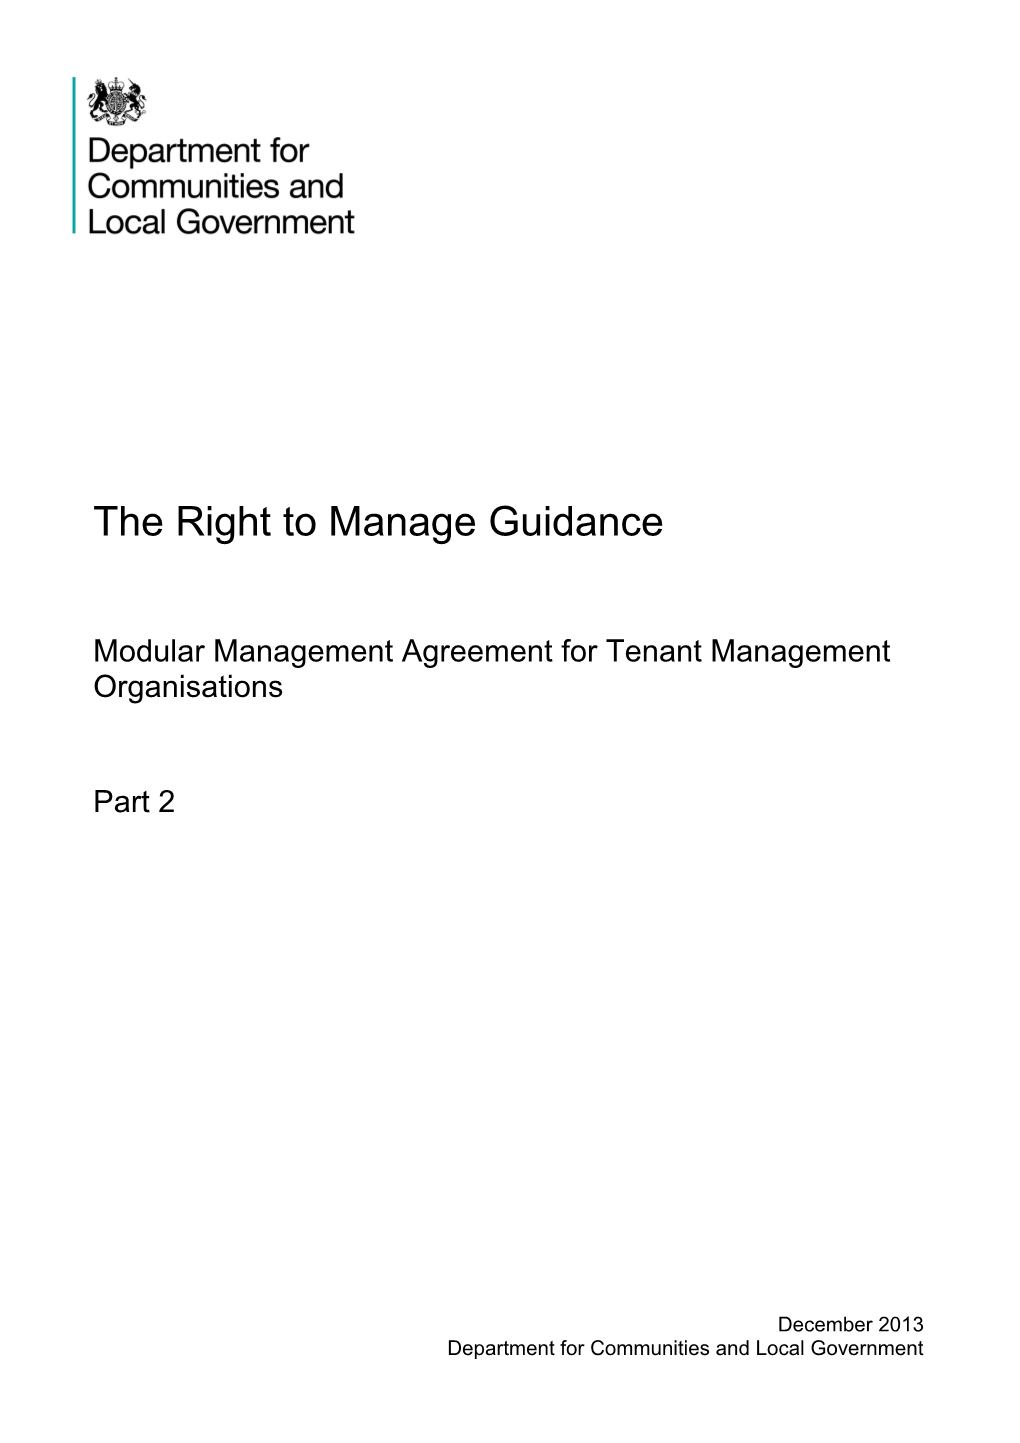 Modular Management Agreement for Tenant Management Organisations